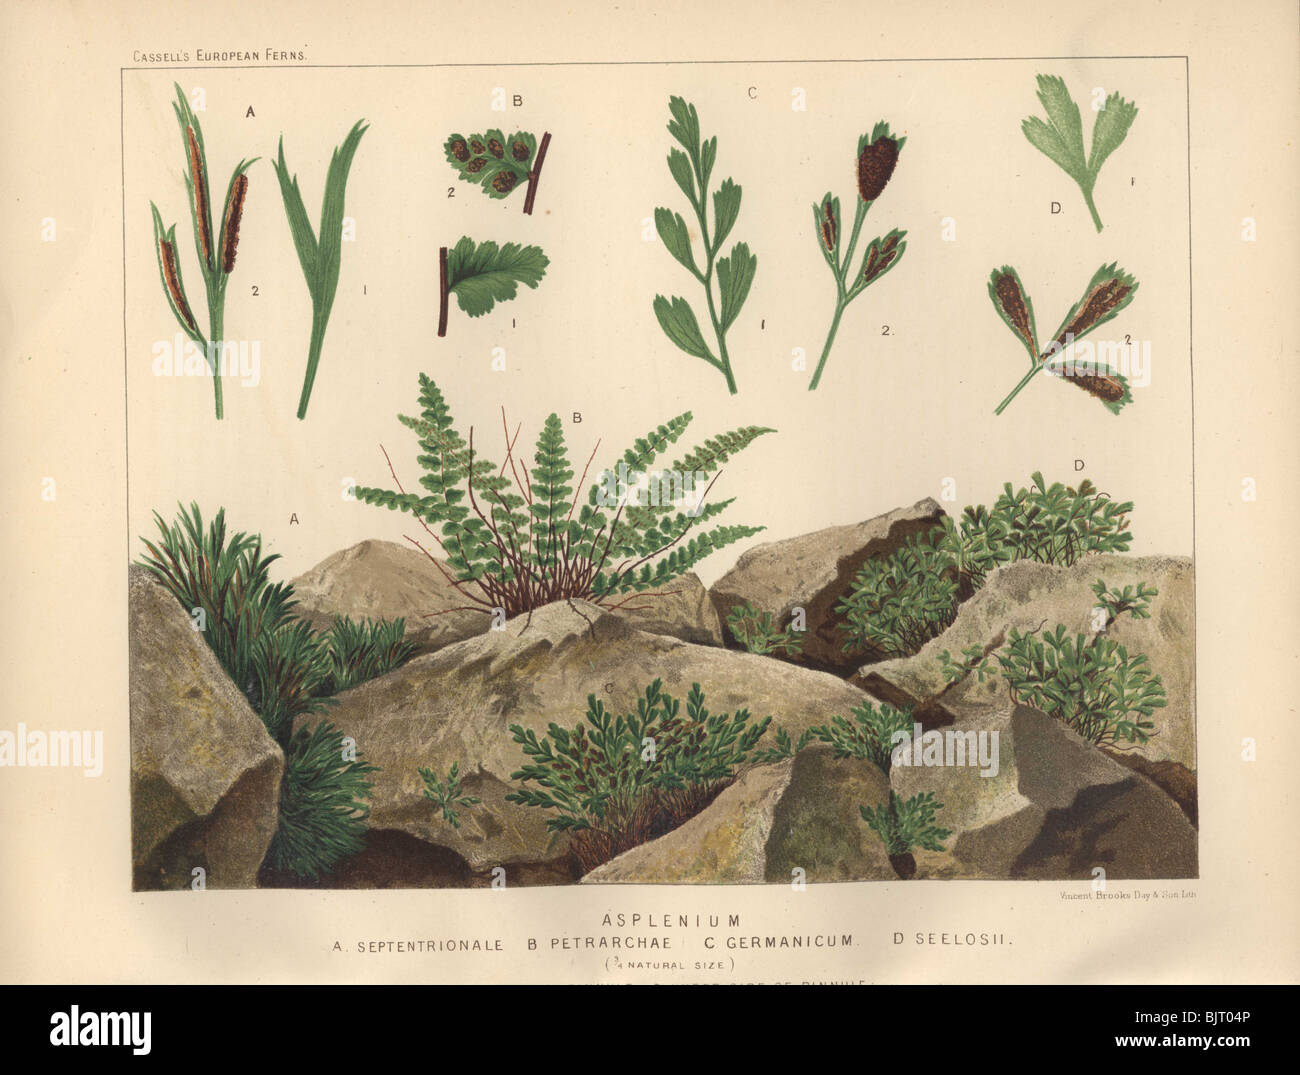 Mediterranean Petrarch's spleenwort fern (Asplenium petrarchae), forked spleenwort and German spleenwort. Stock Photo